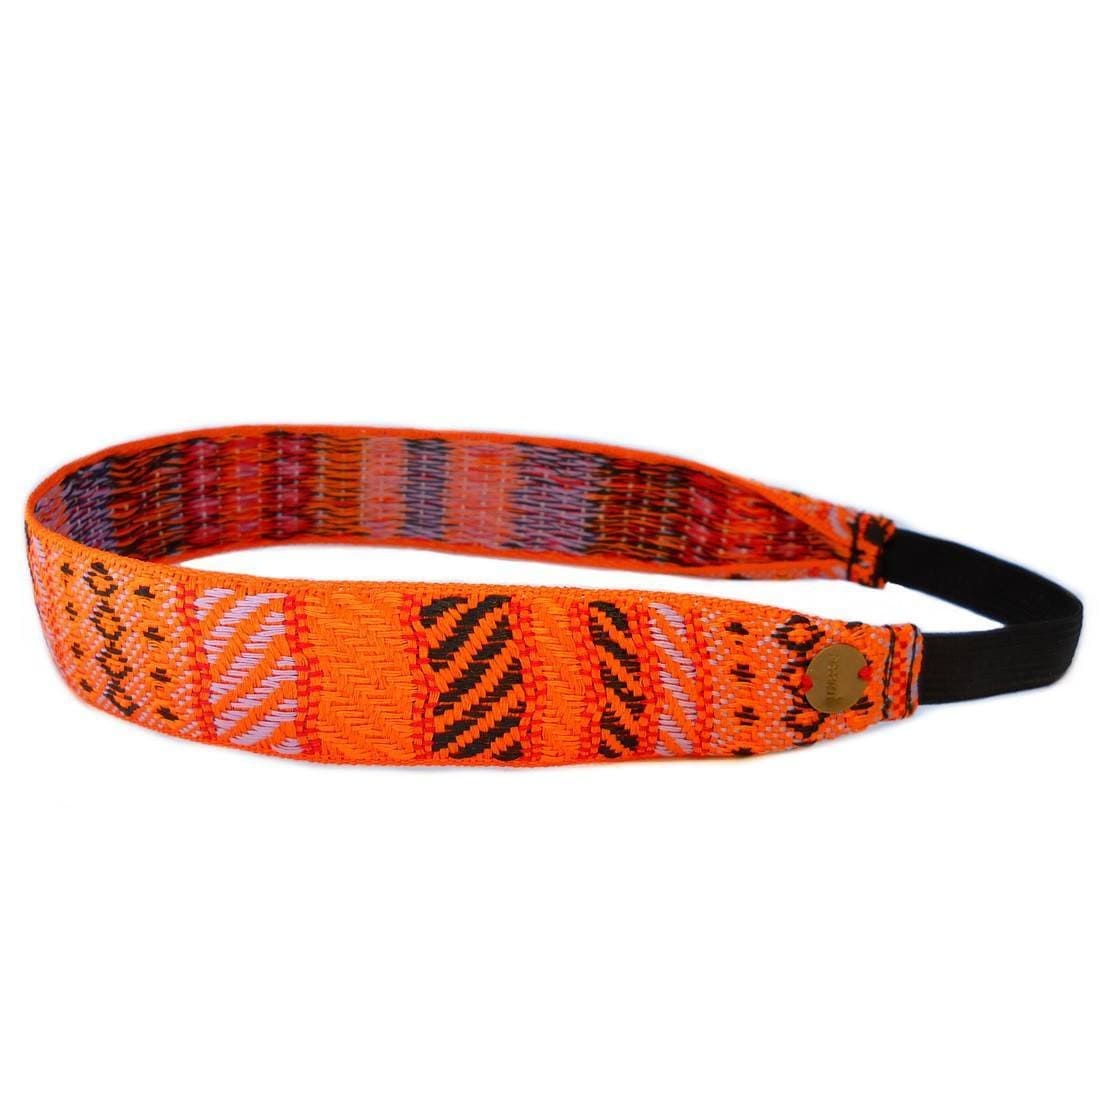 Headbands - Boho Chic Ethnic Orange Headband